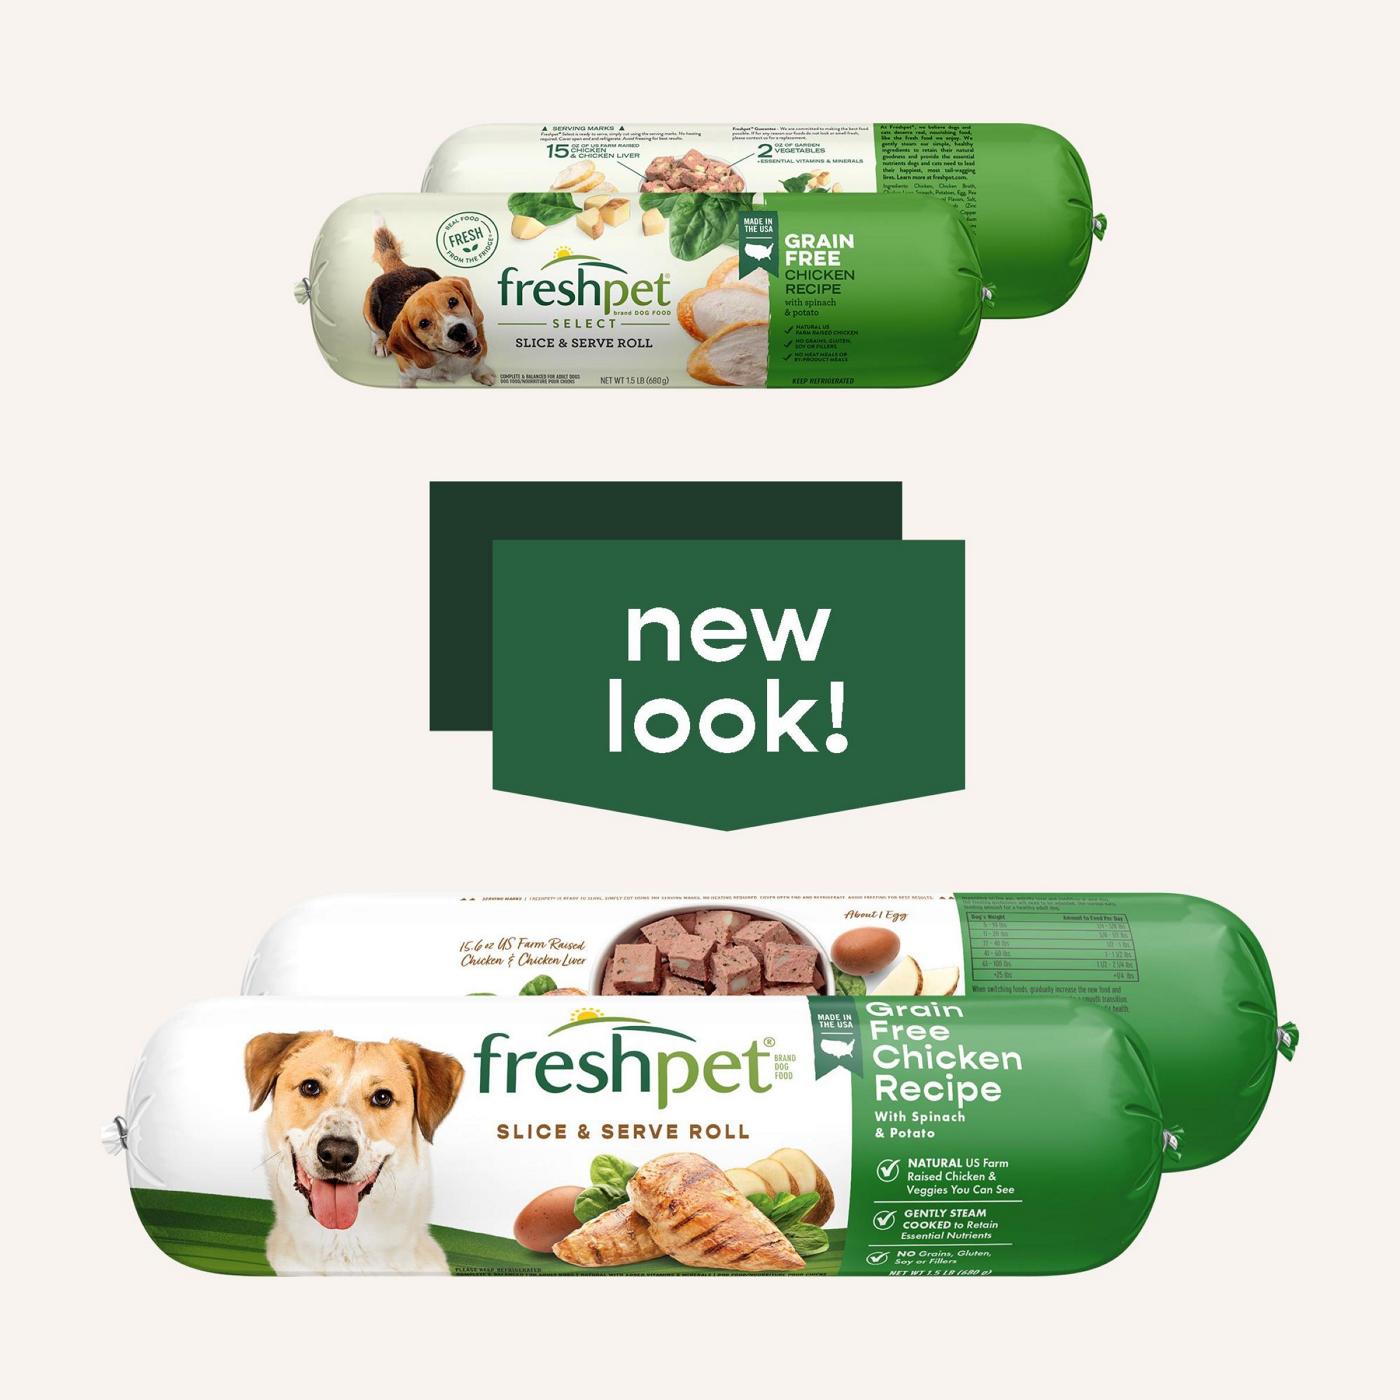 Freshpet Slice & Serve Grain Free Chicken Fresh Dog Food; image 3 of 9